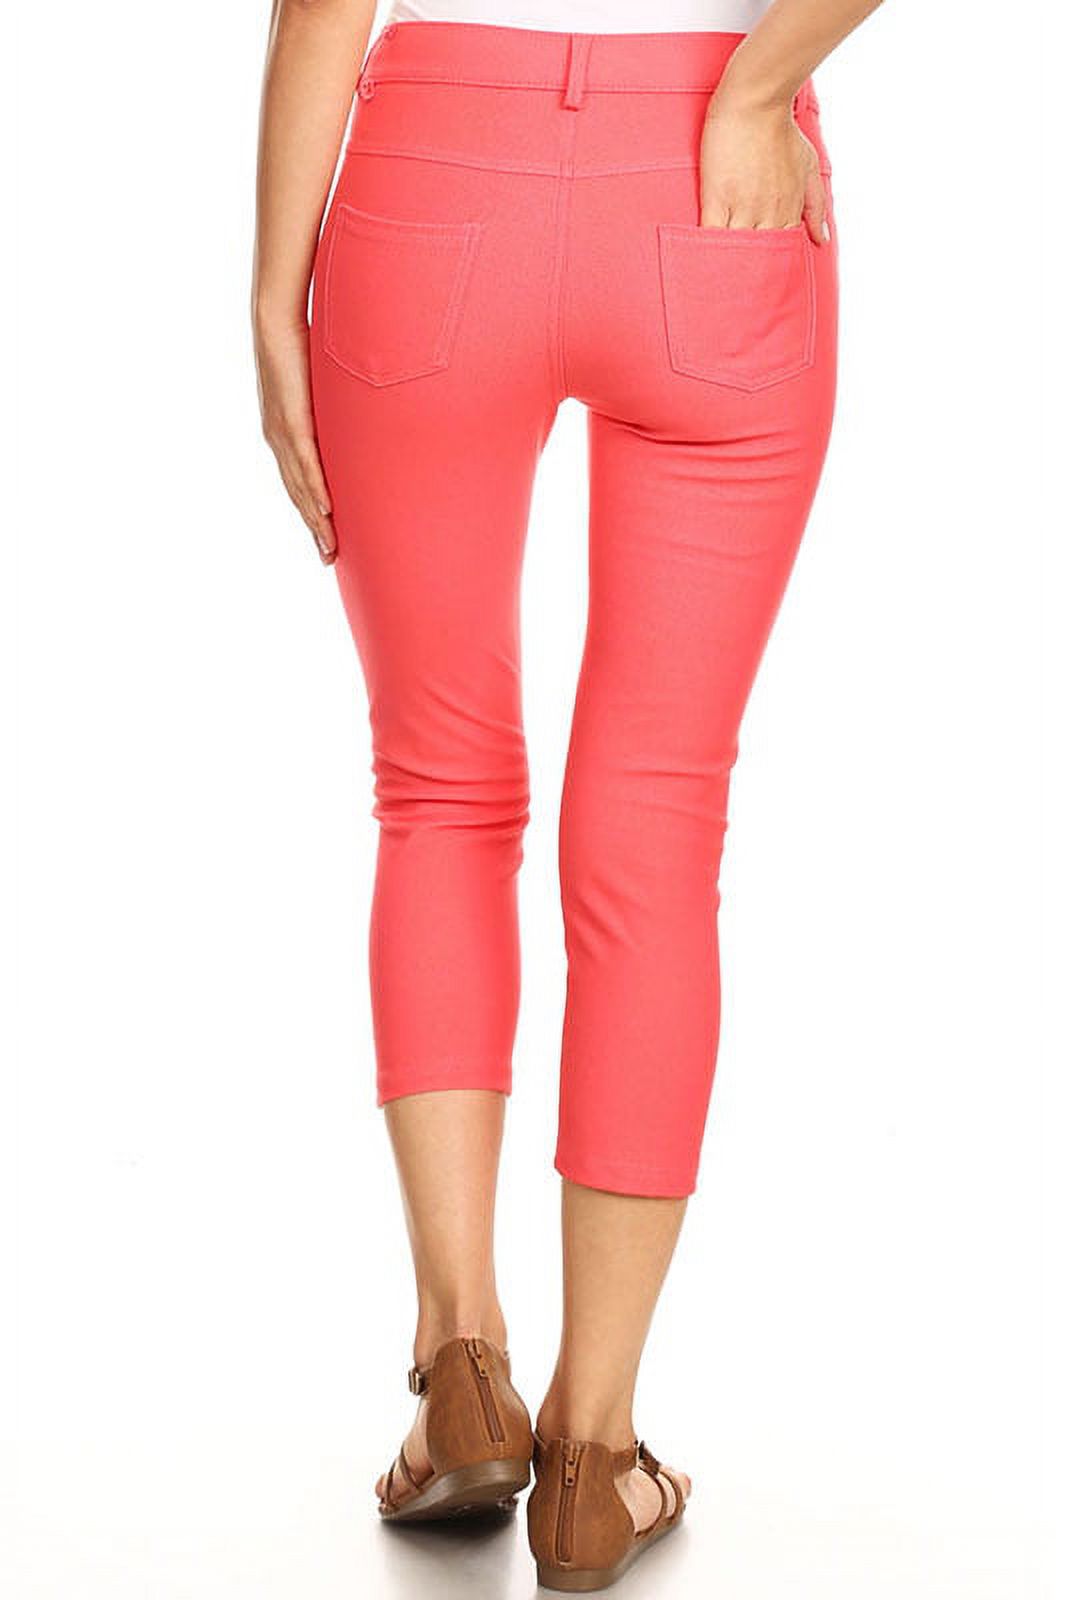 Women's Cotton Blend Capri Jeggings Stretchy Skinny Pants Jeans Leggings - image 3 of 3